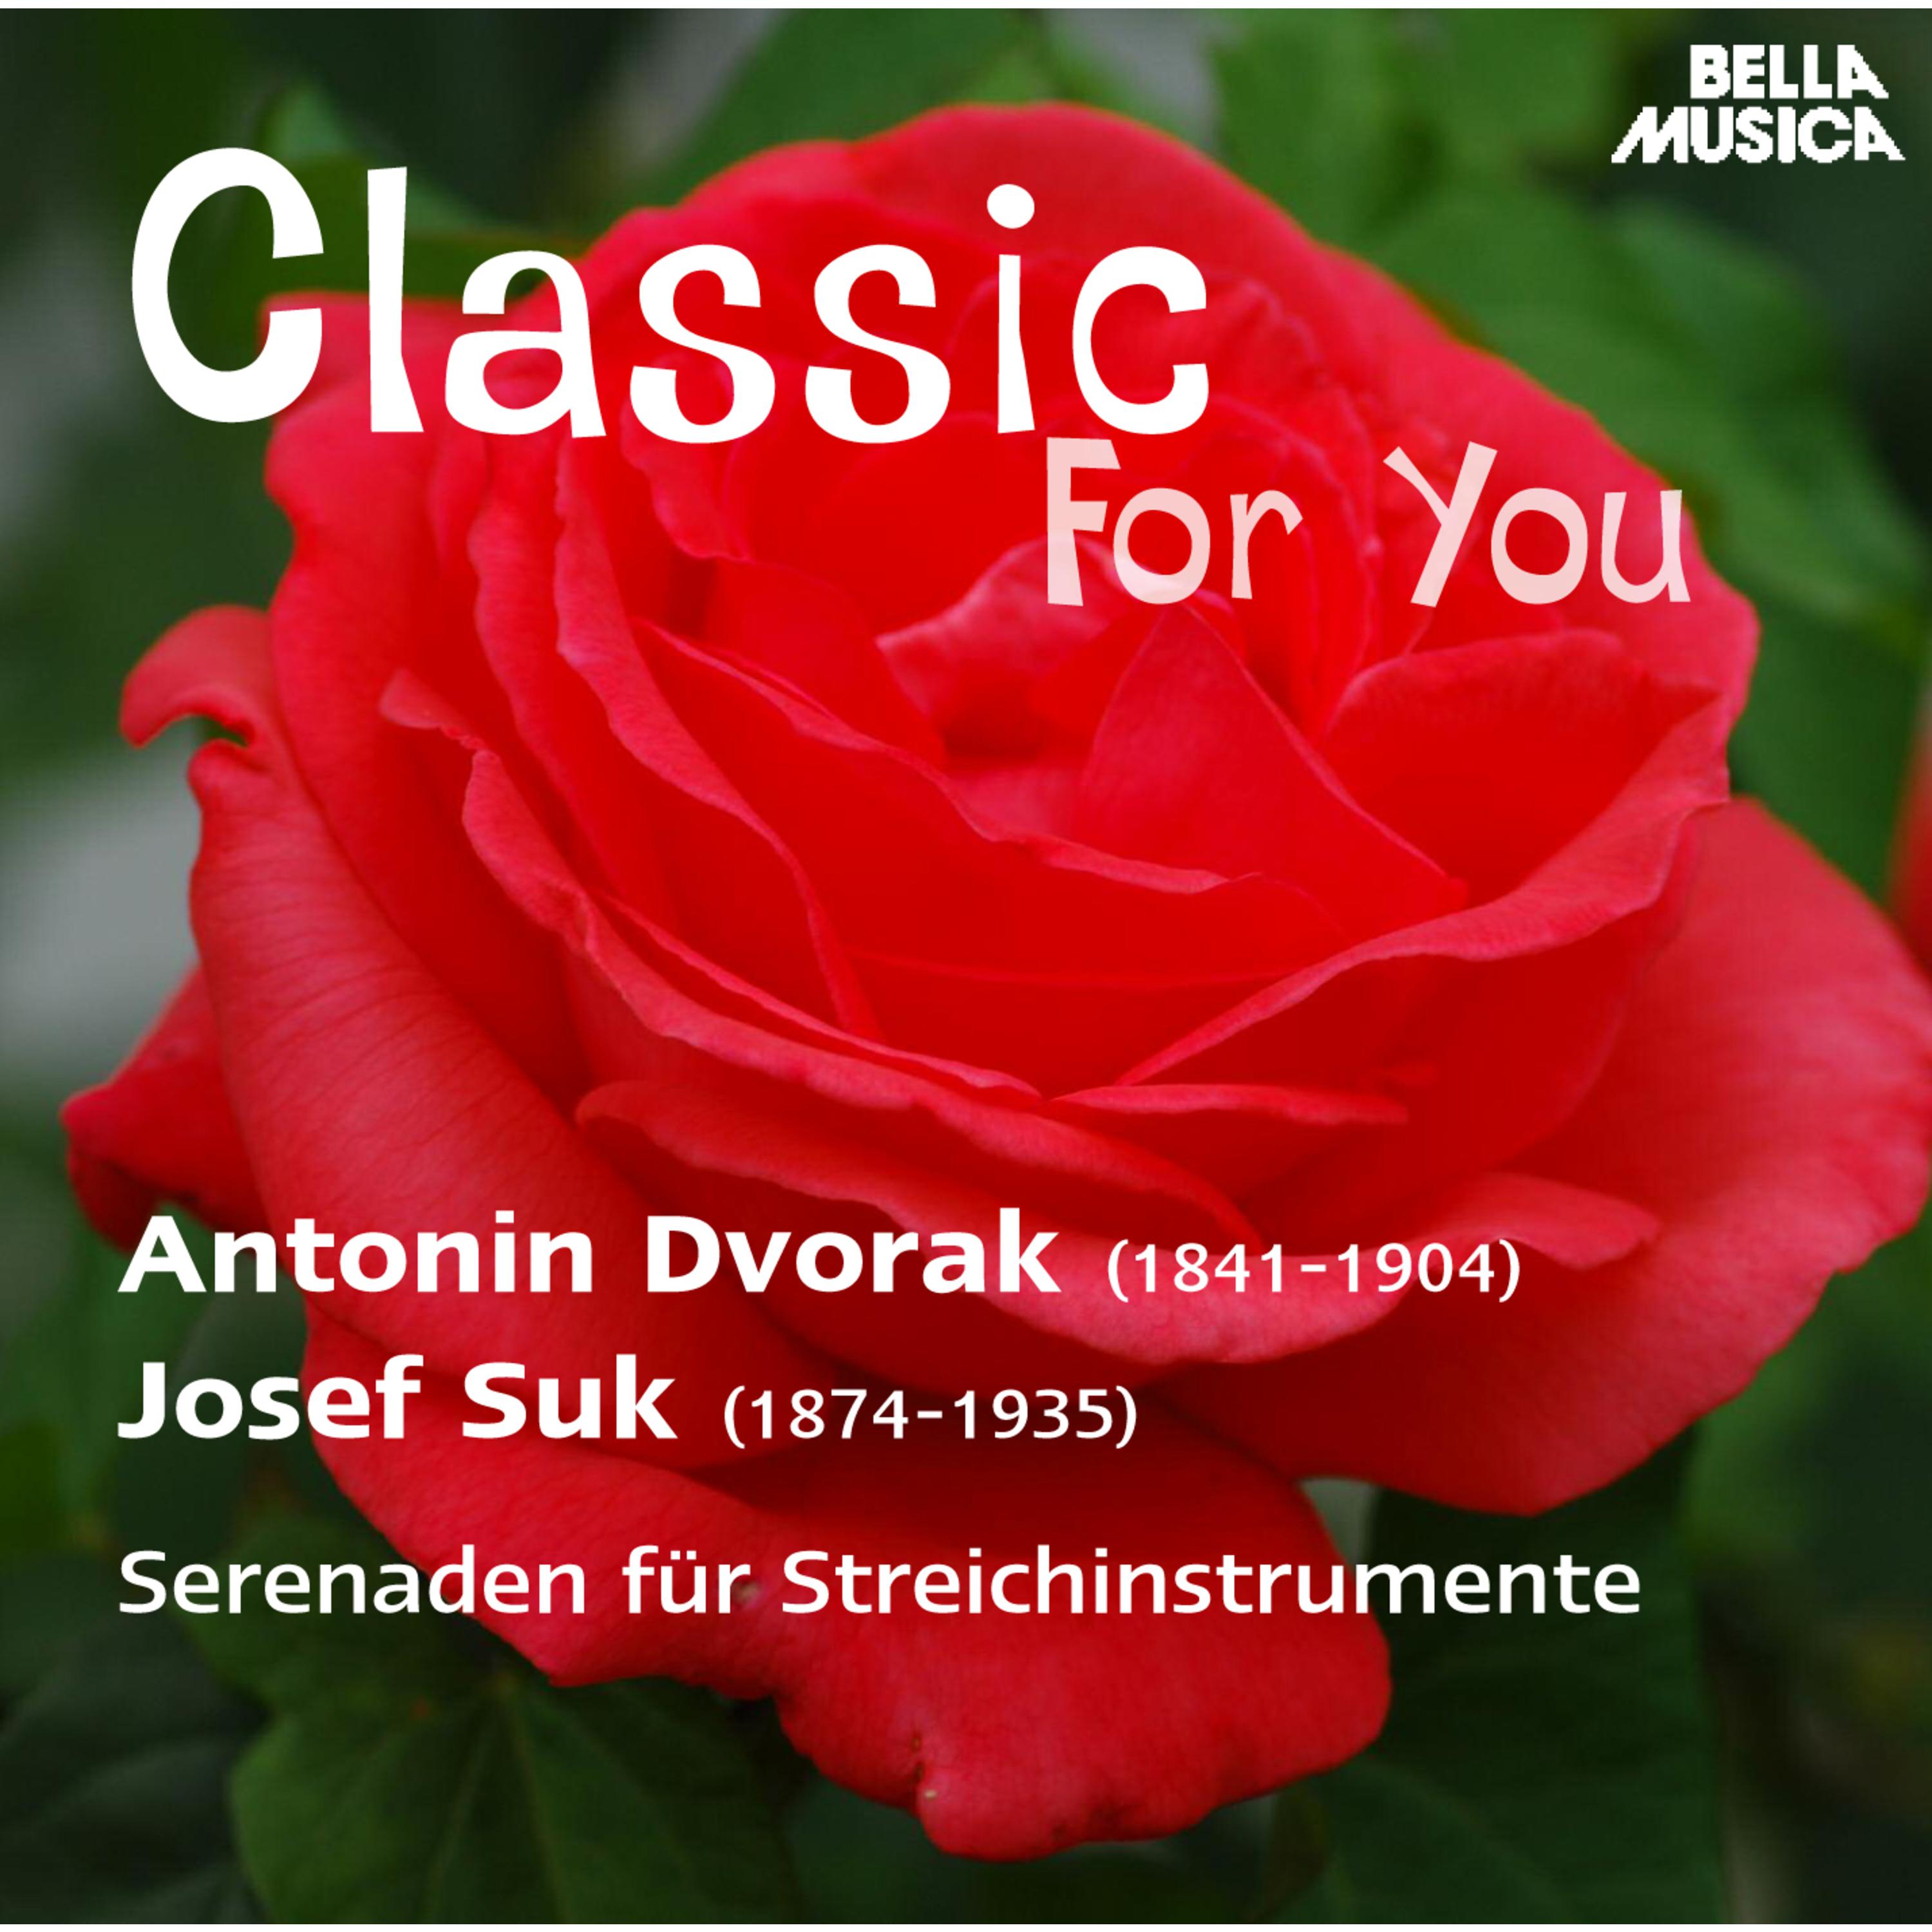 Serenade fü r Streichinstrumente in E Major, Op. 22: V. Finale Allegro vivace